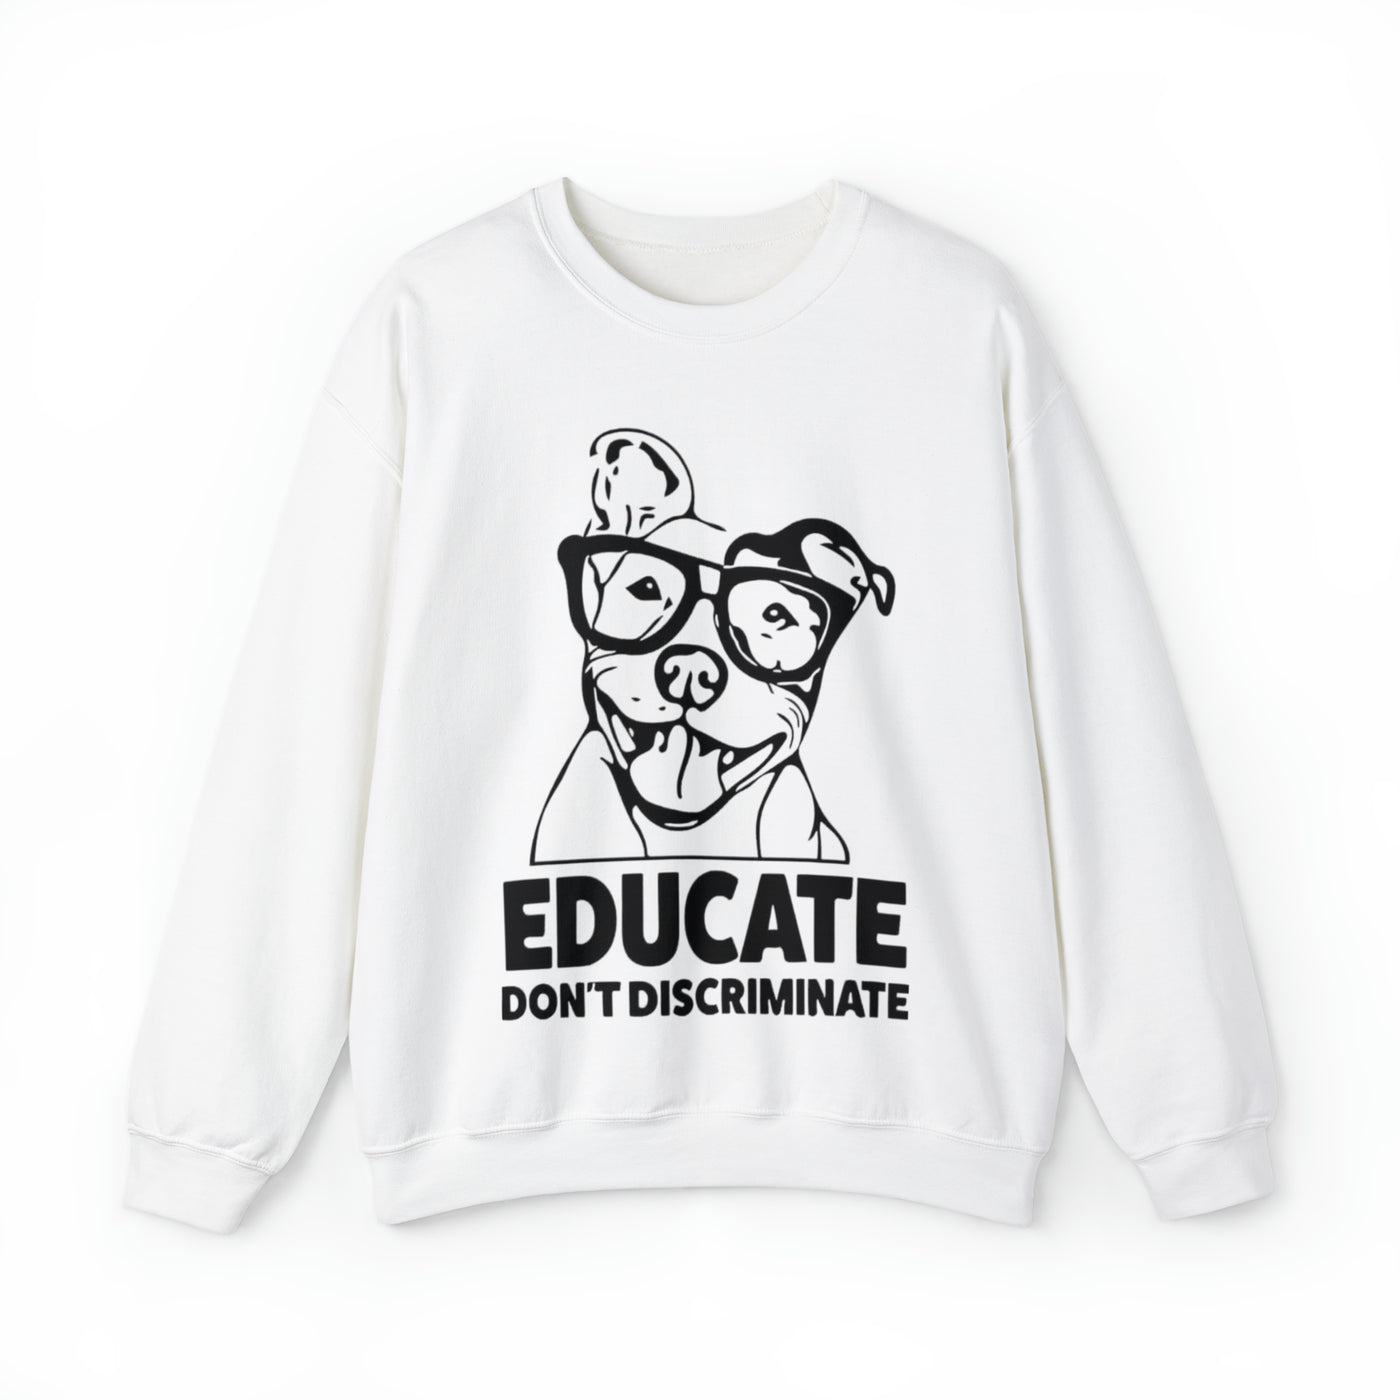 Educate Don't Discriminate Sweatshirt (Assorted Colors)